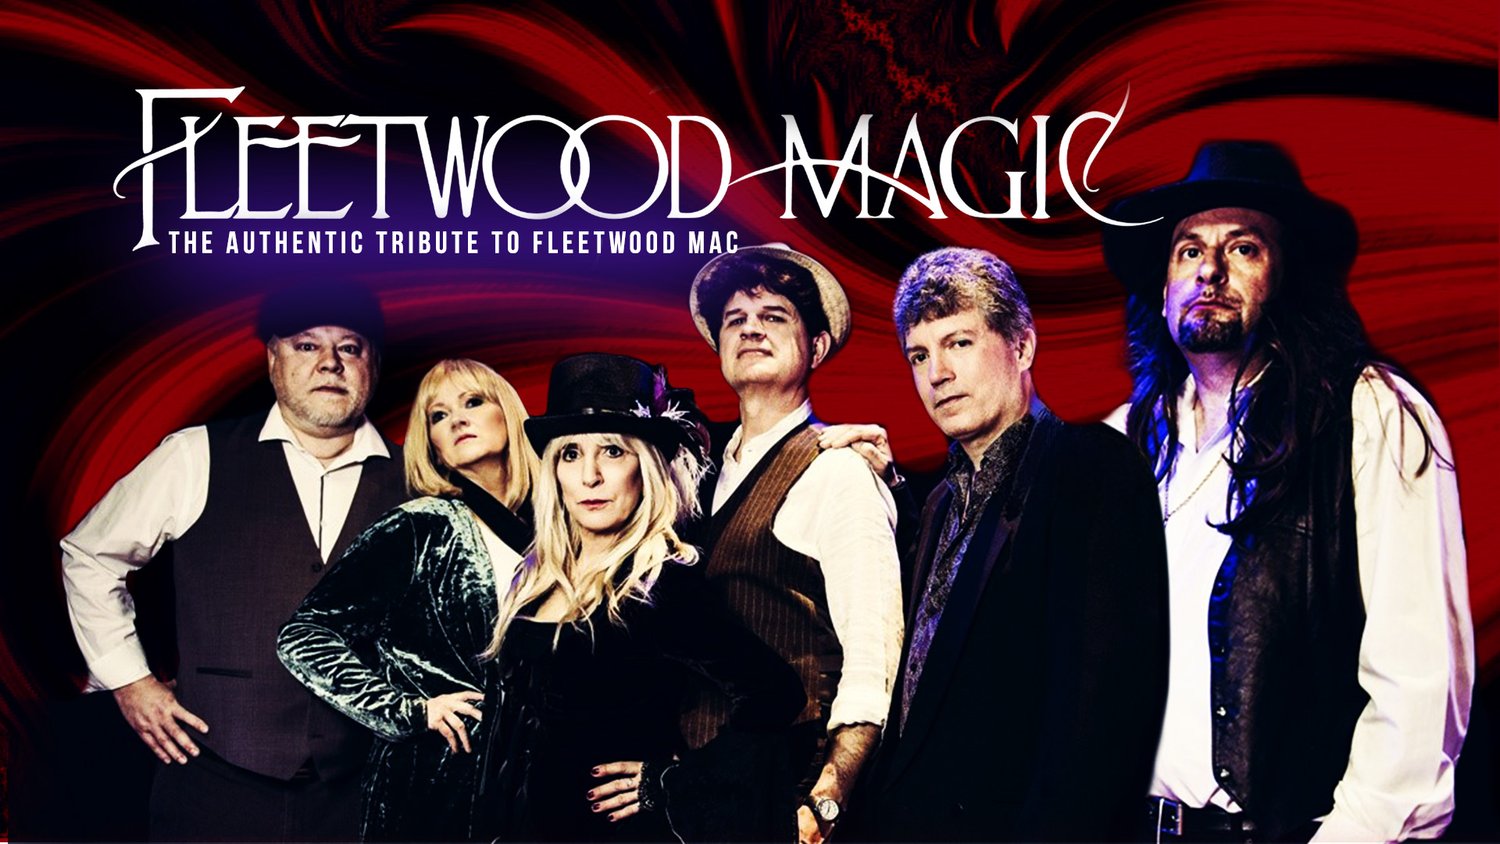 Fleetwood Magic - The Authentic Tribute to Fleetwood Mac